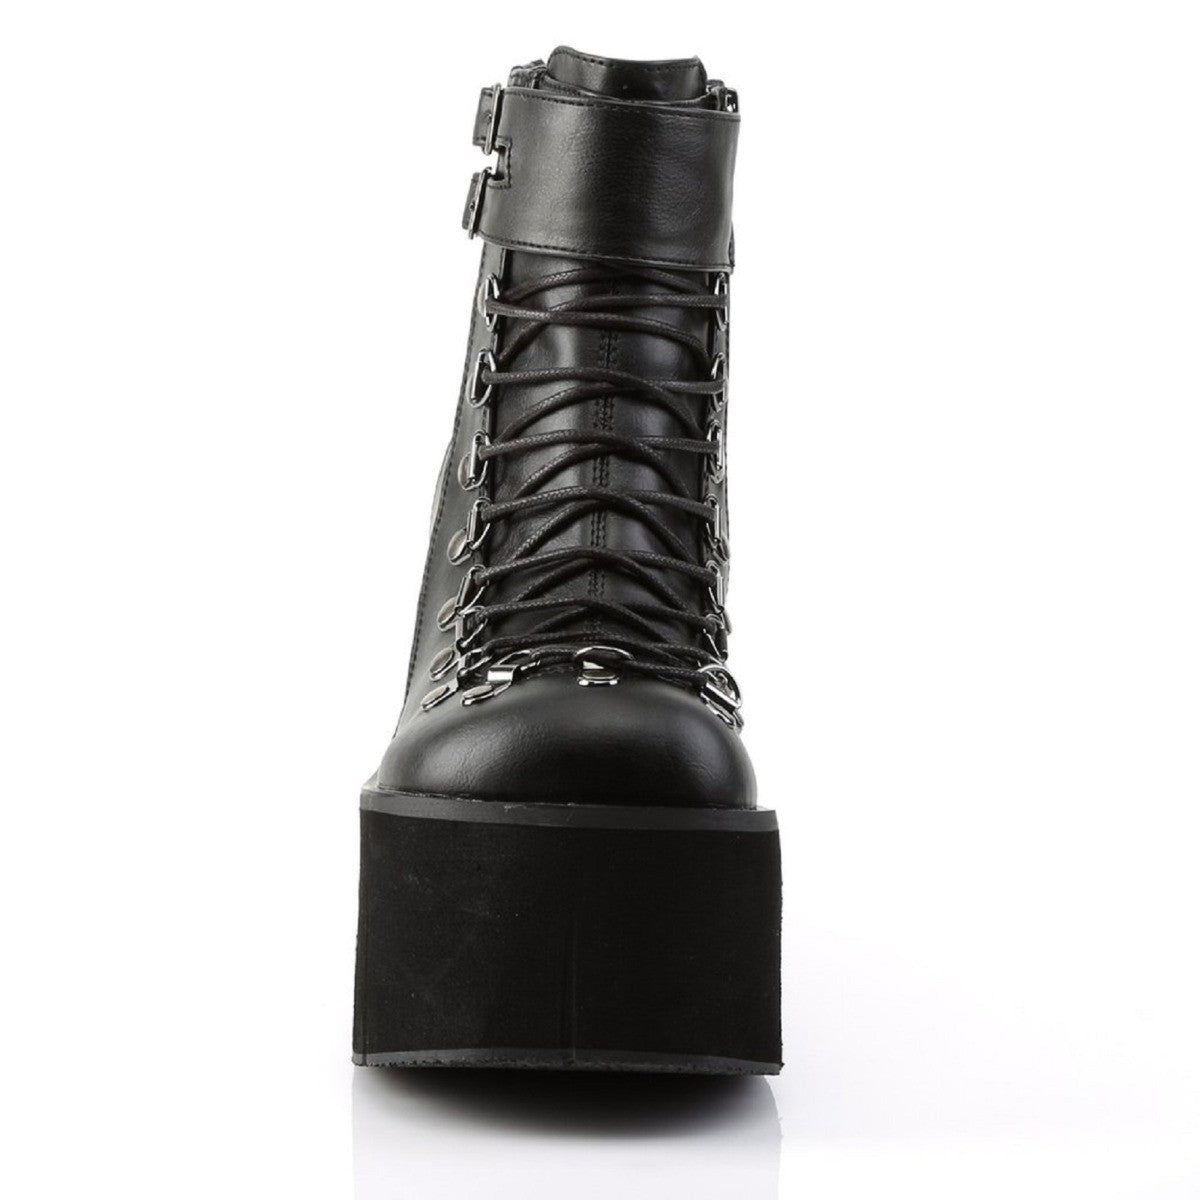 Demonia Kera 21 Gothic Punk Emo Lace Up Platform Ankle Boots